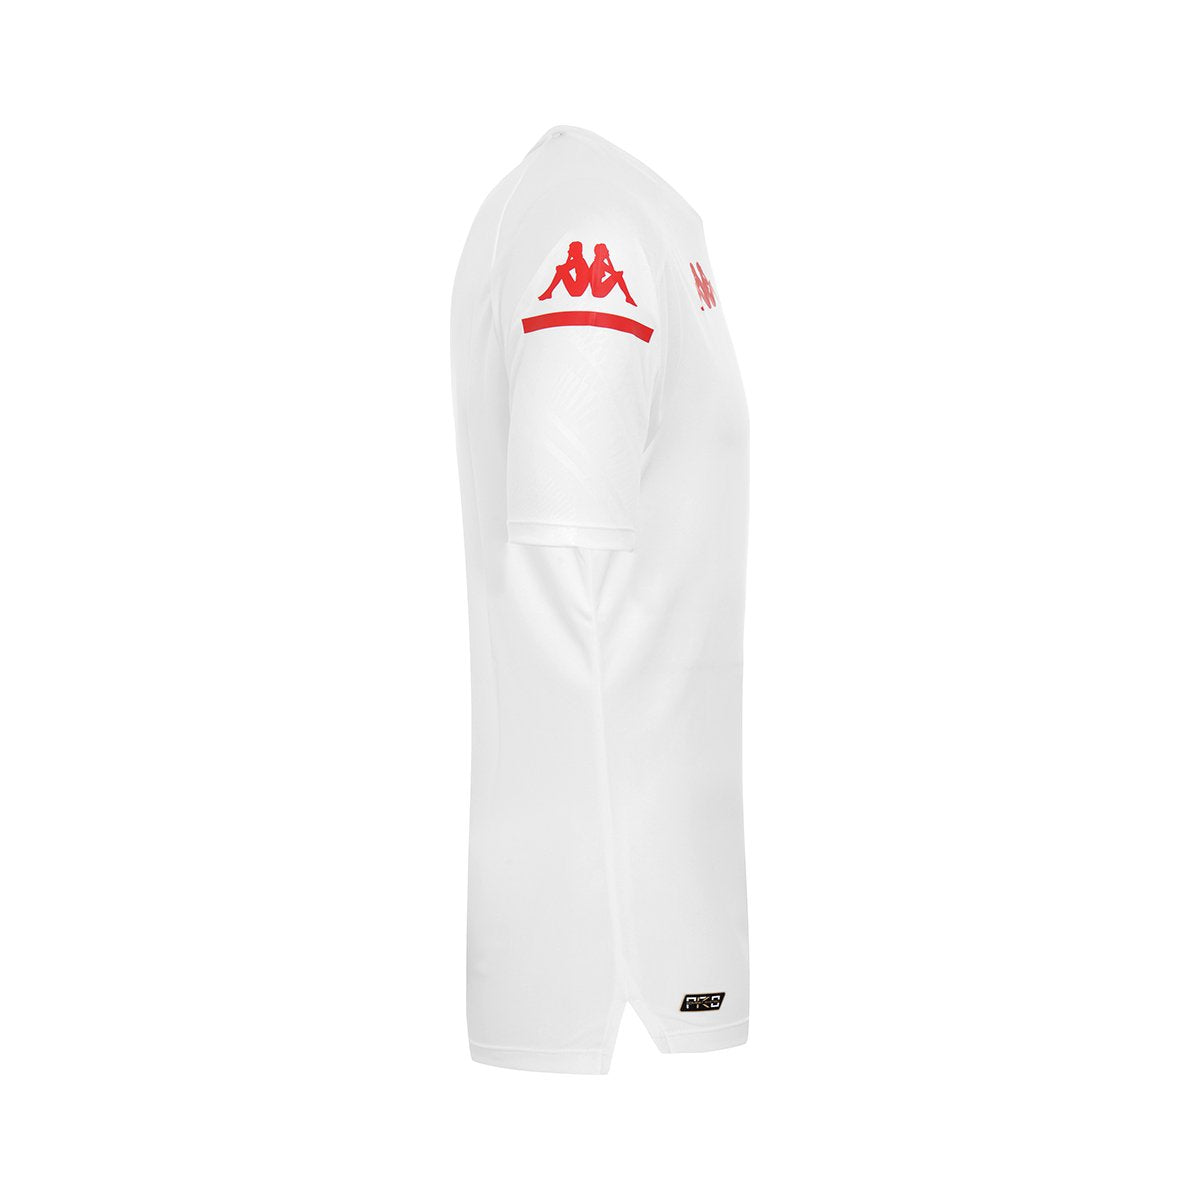 Camiseta Aboes Pro 4 As Monaco Blanco Hombre - Imagen 2